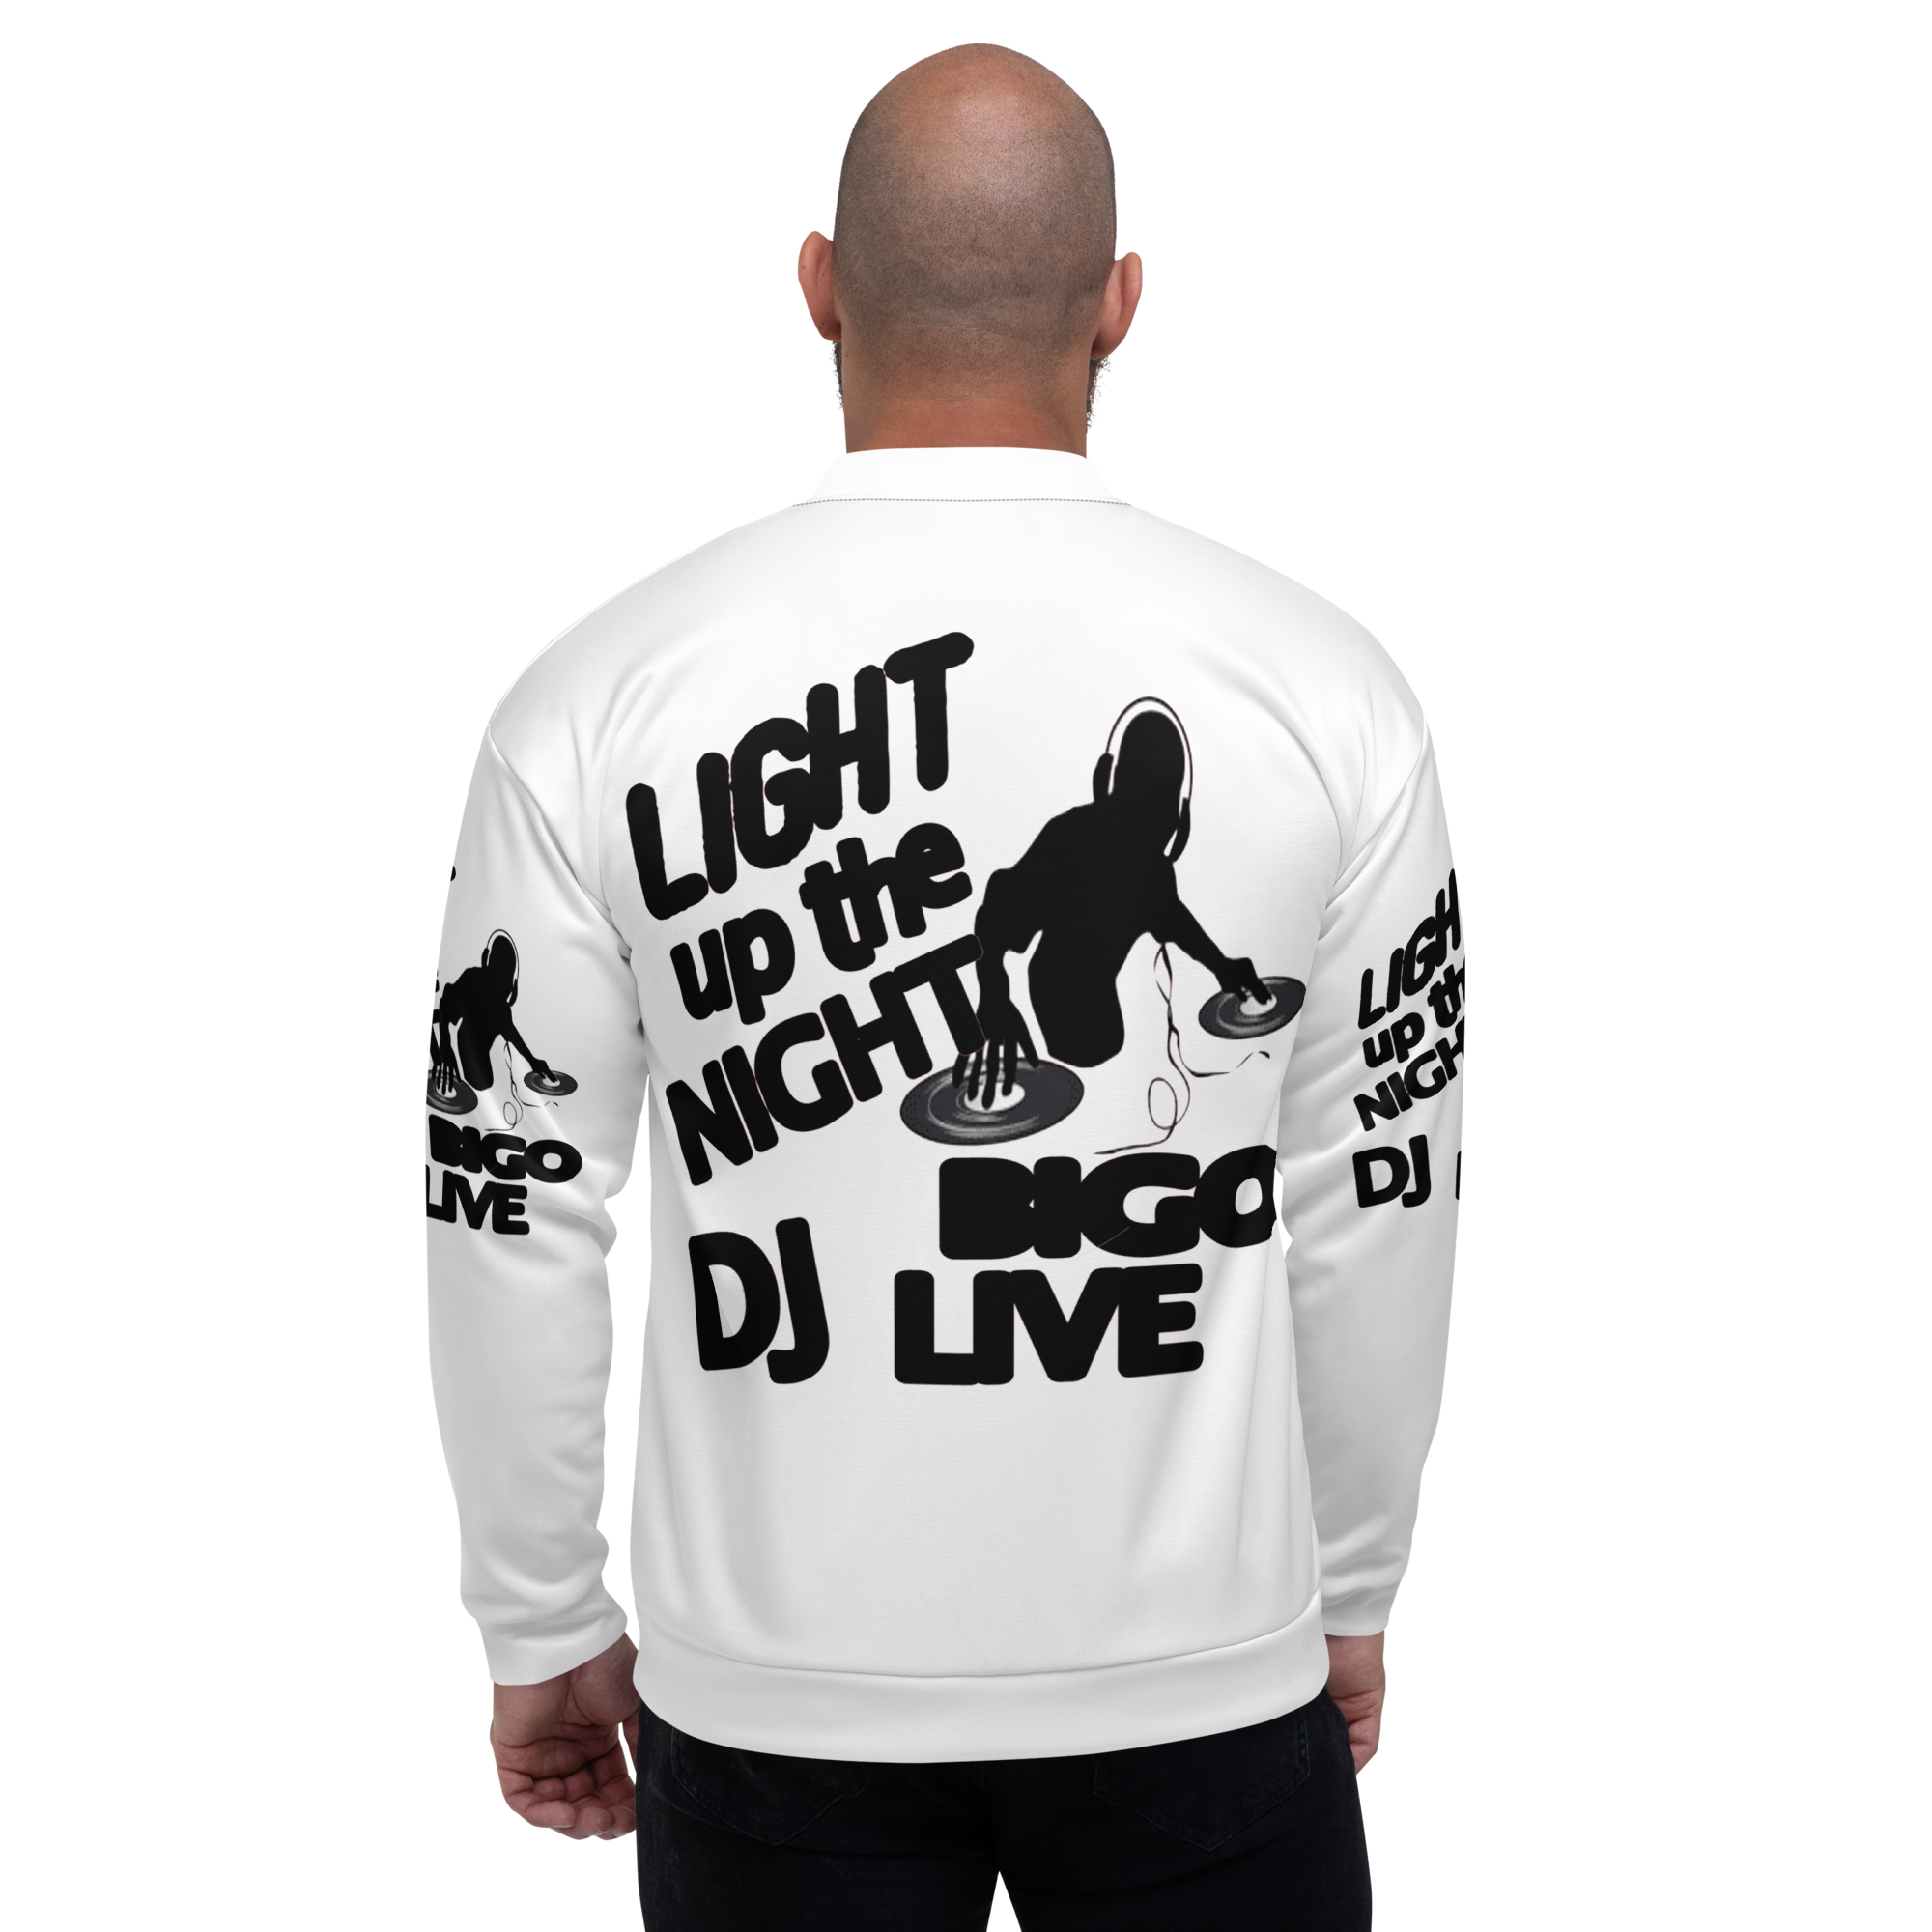 Unisex Bomber Jacket LIGHT UP THE NIGHT DJ BIGO LIVE